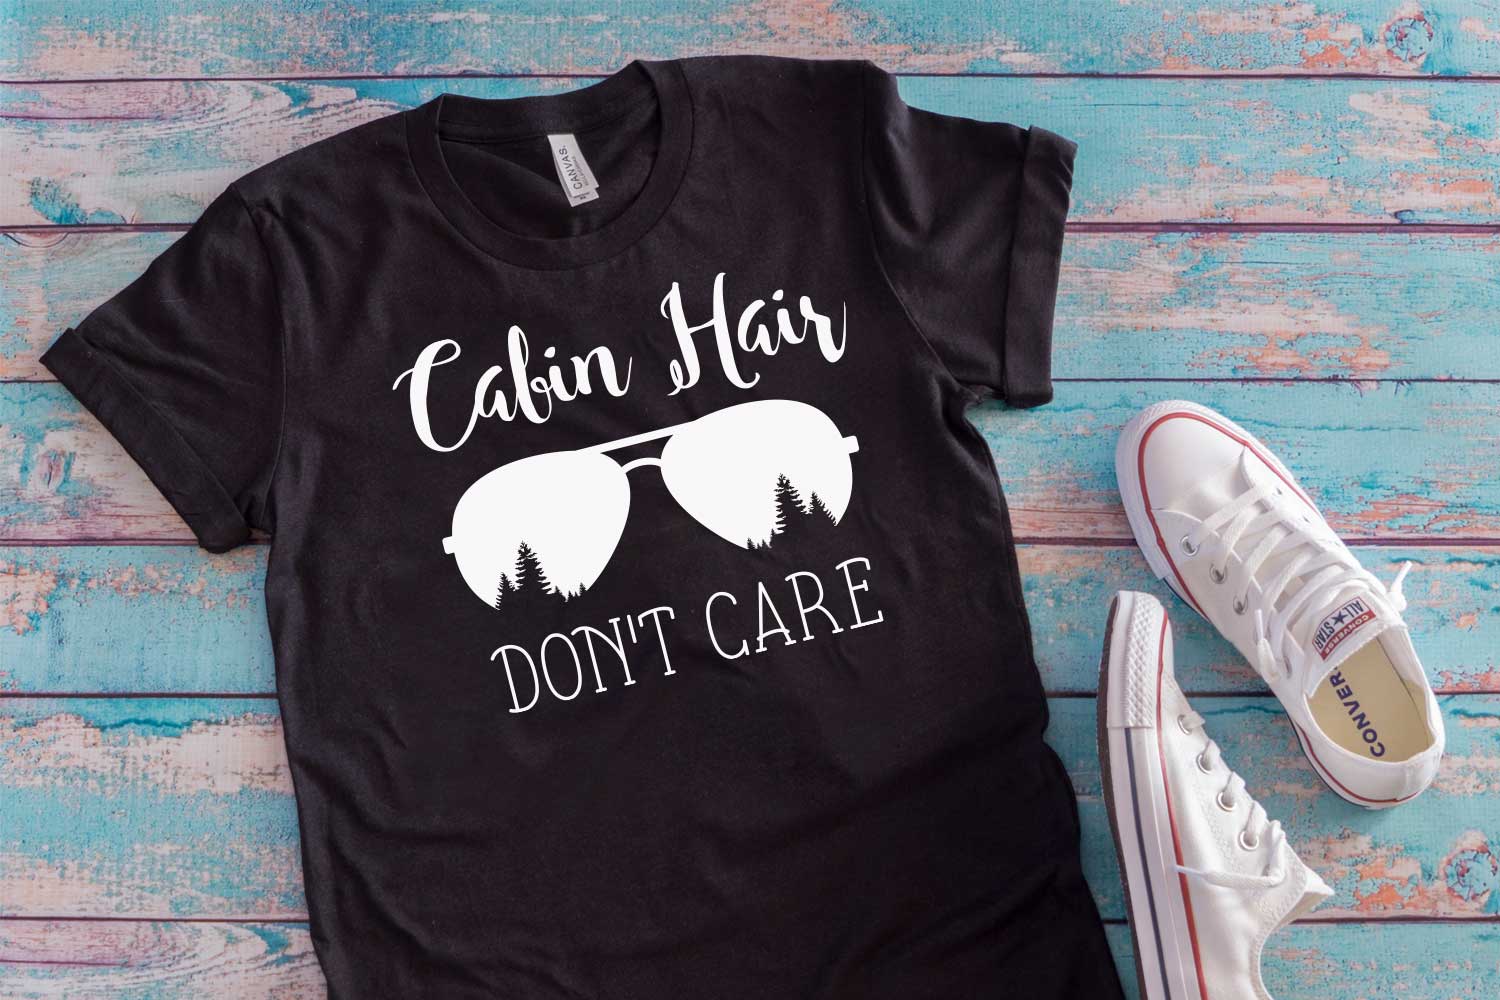 Download Cabin hiar don't care t-shirt design|svg file| graphic files